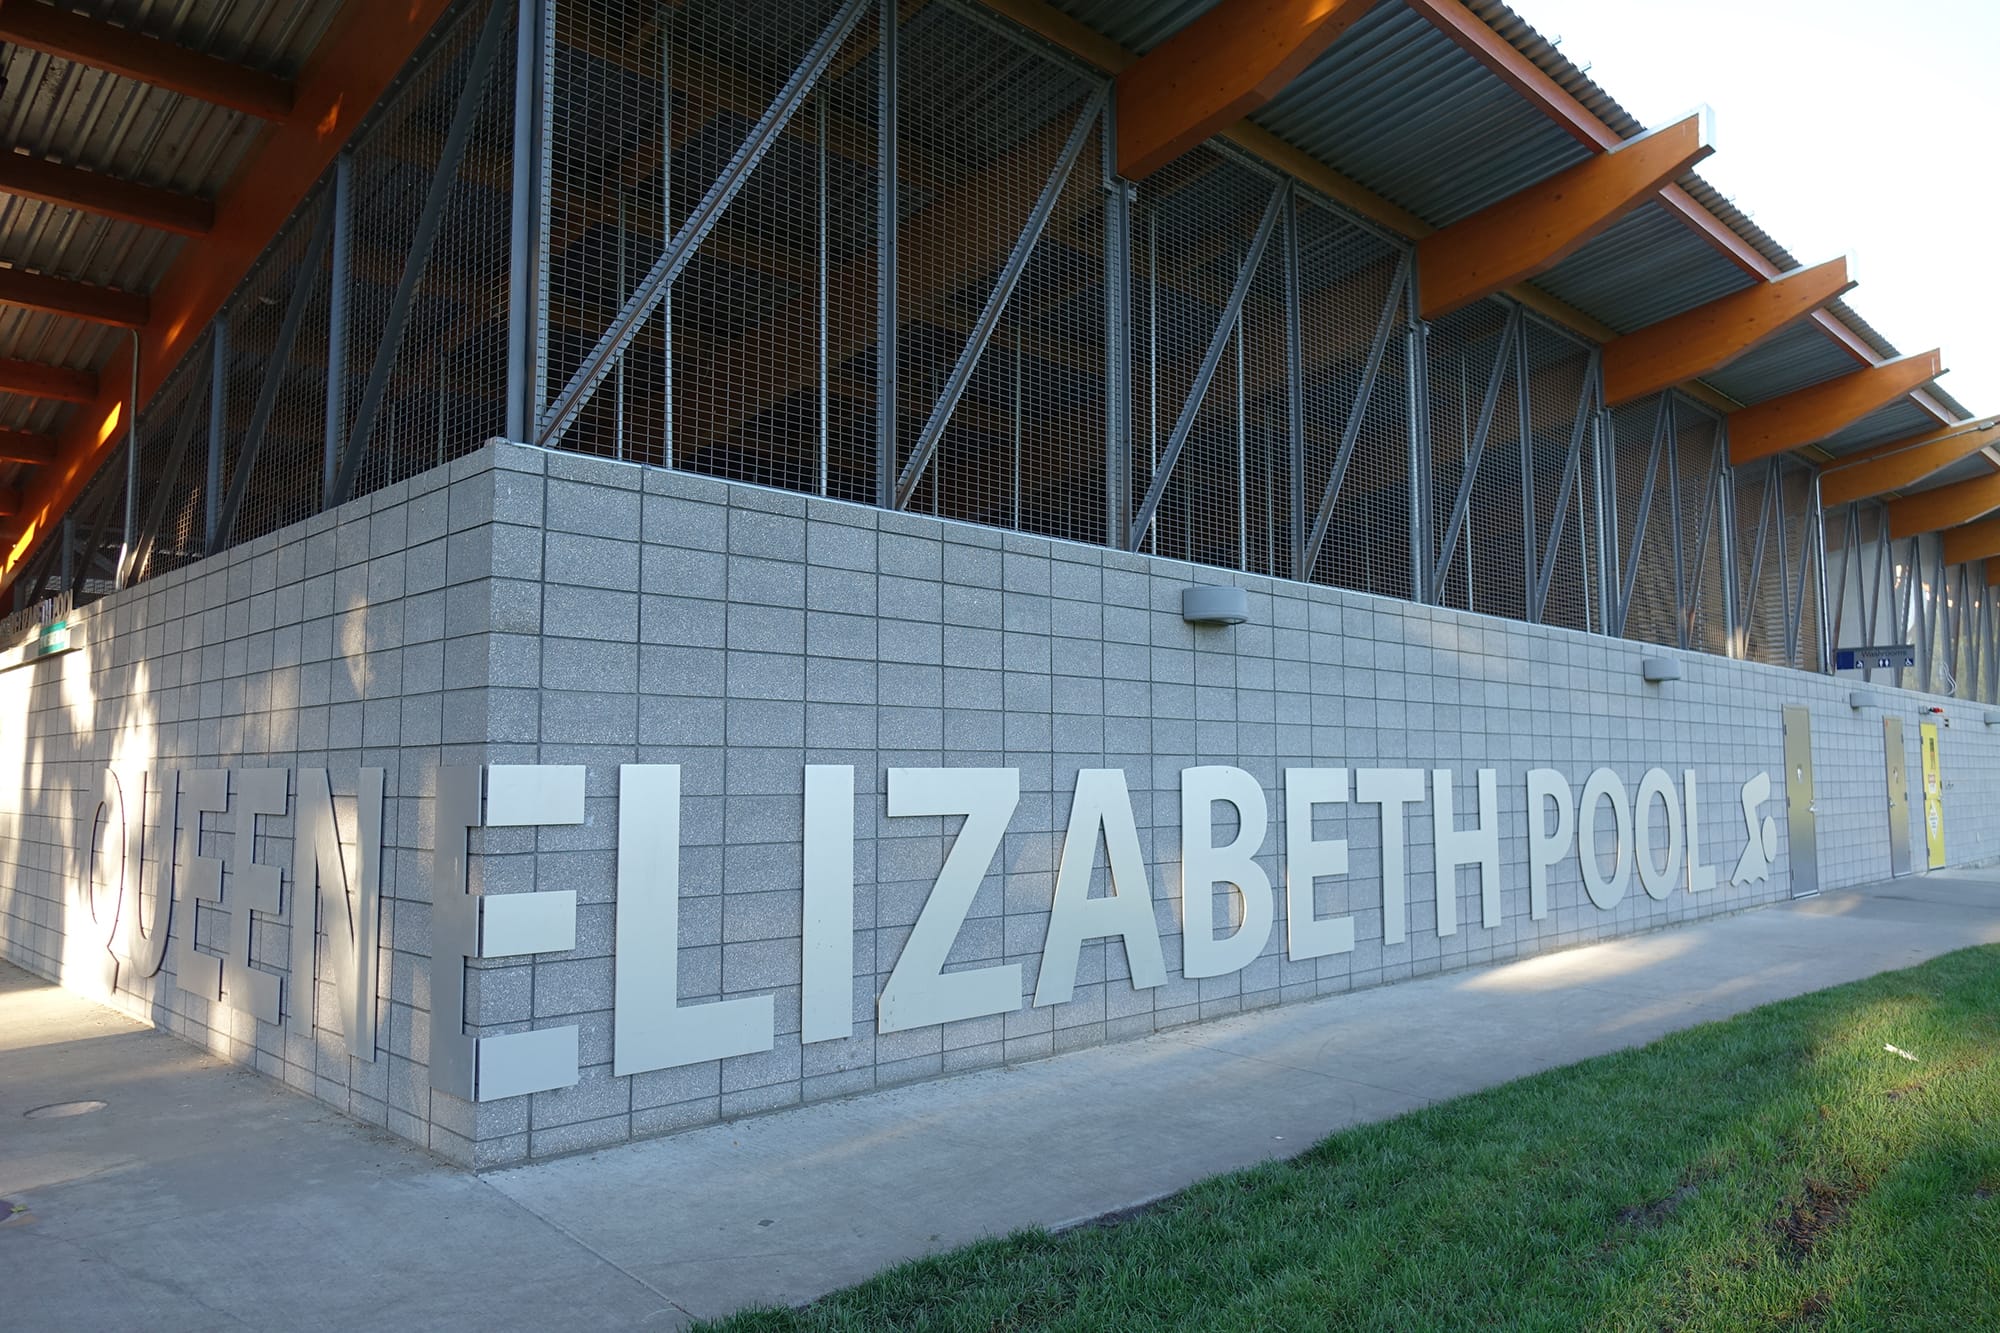 Queen-Elizabeth-Pool exterior with signage